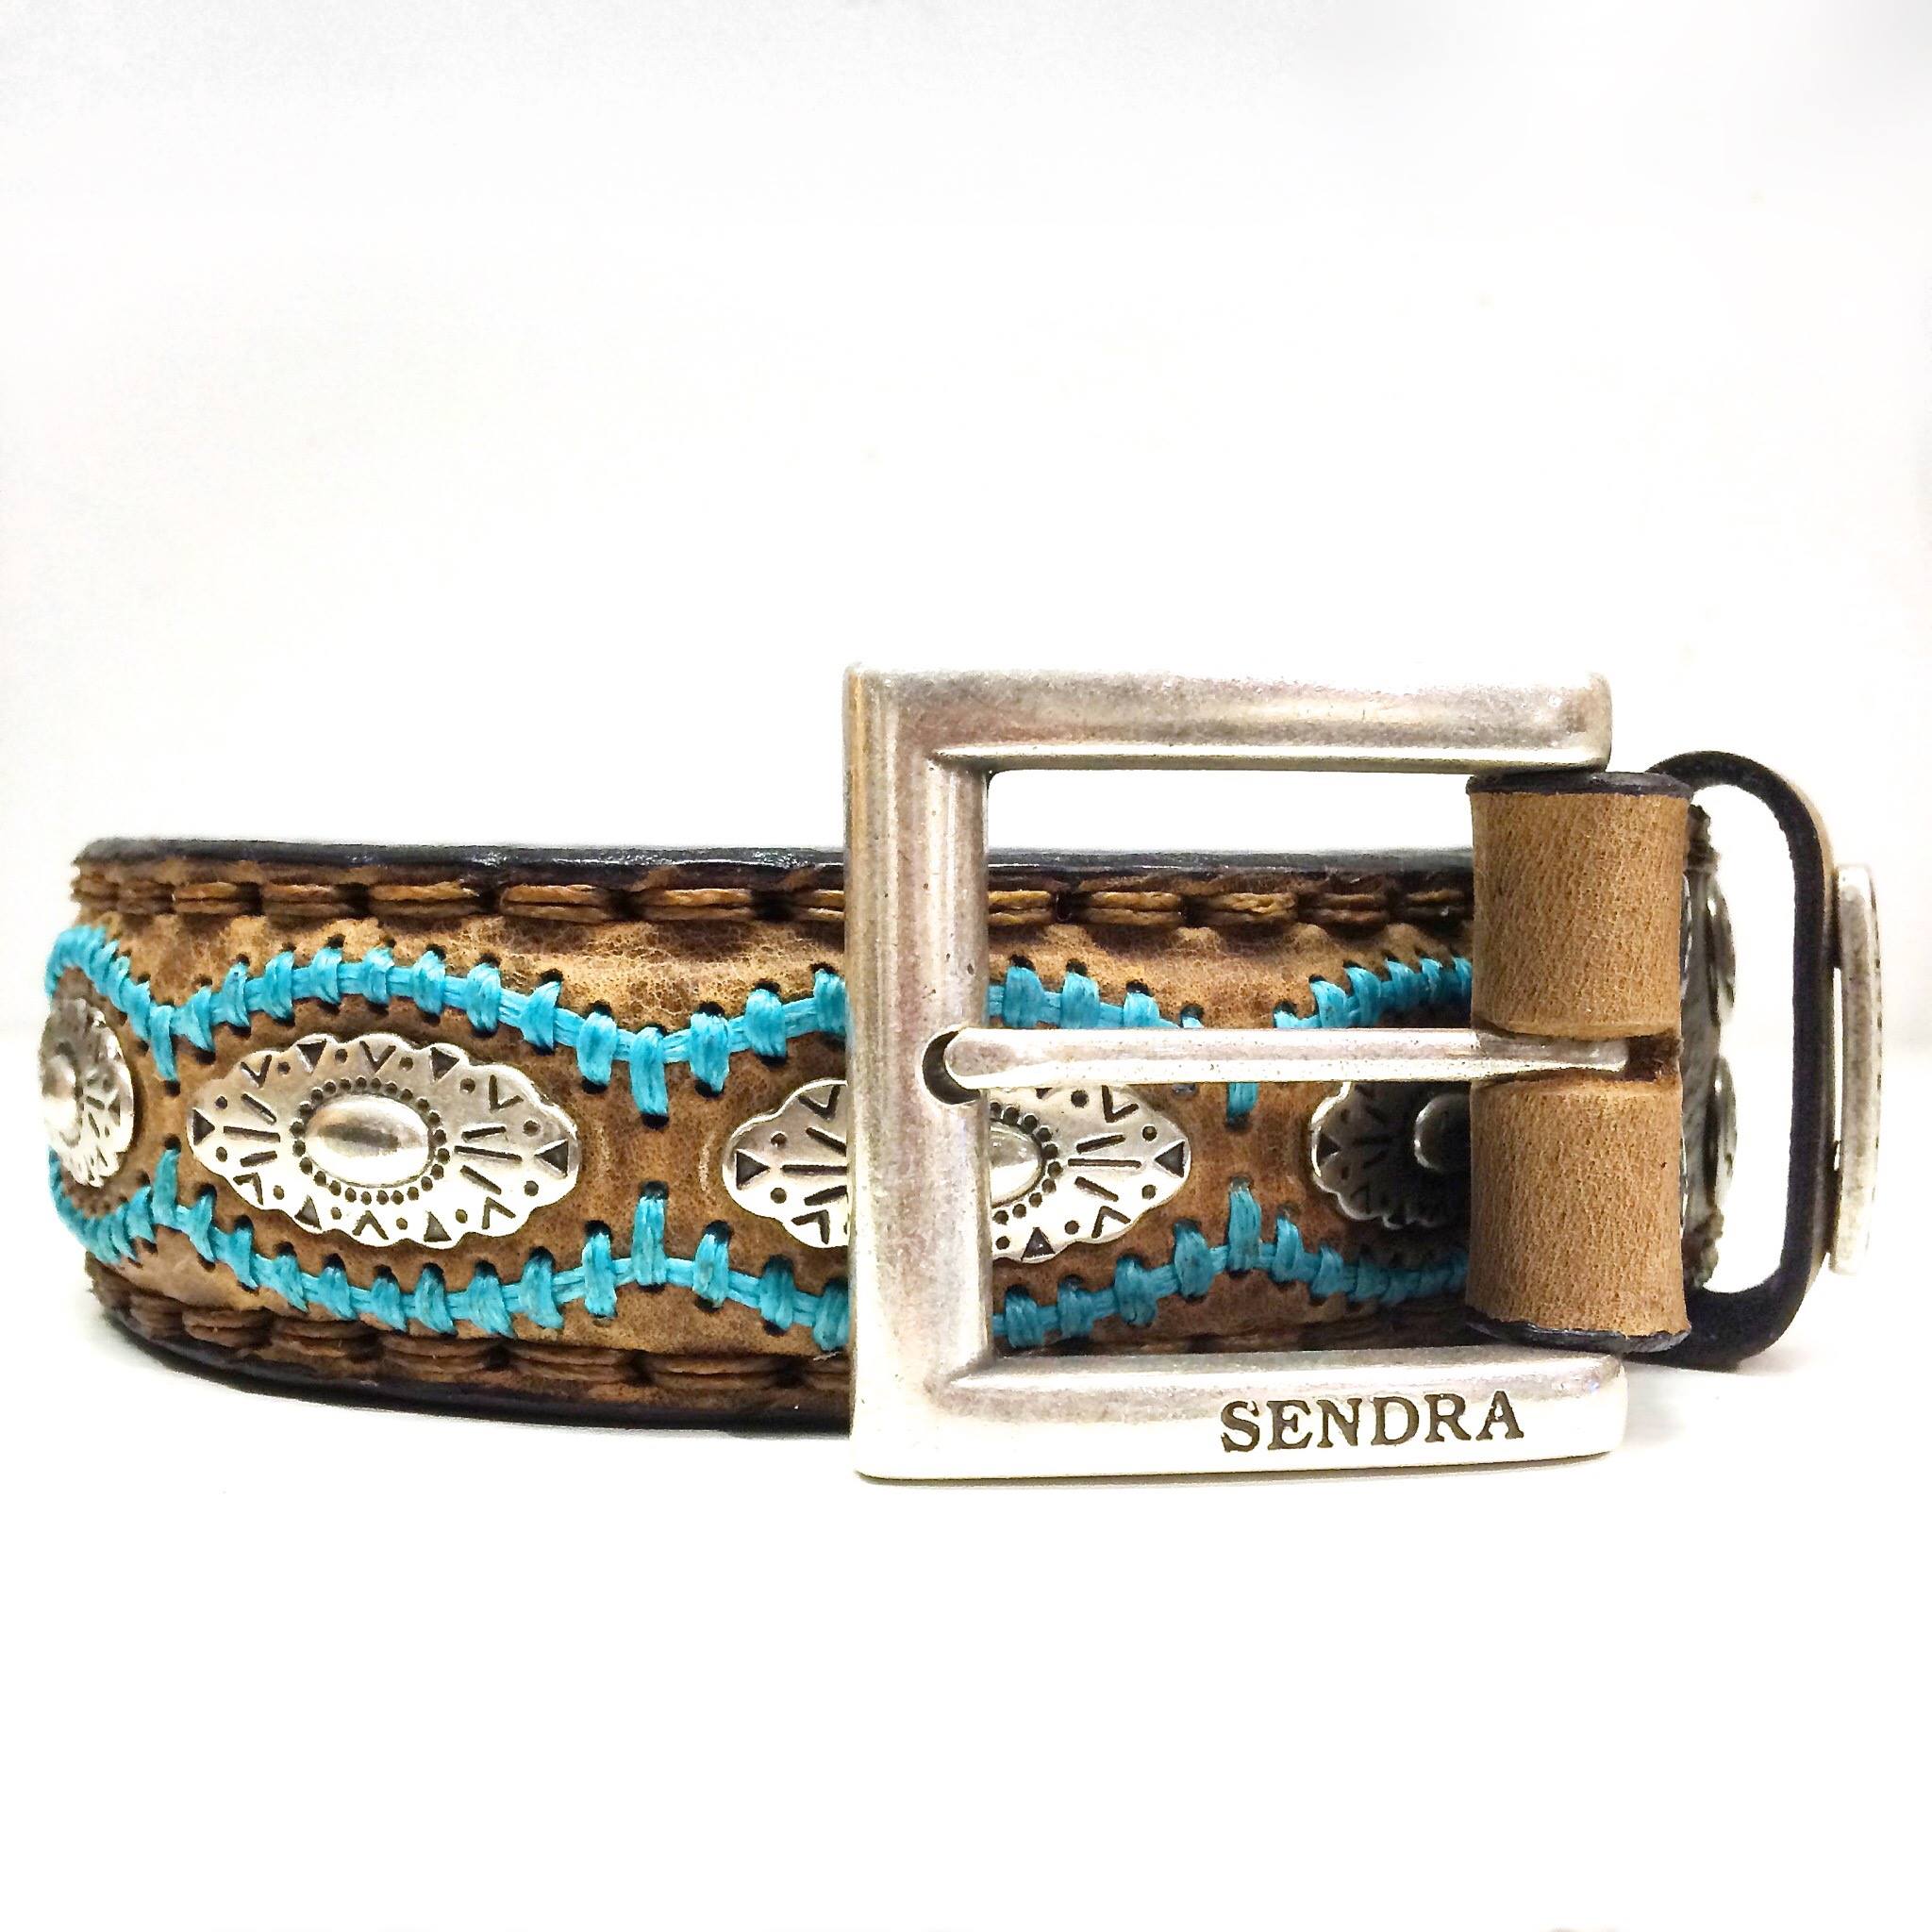 Sendra belt - 7606 brown/turquoise stitching